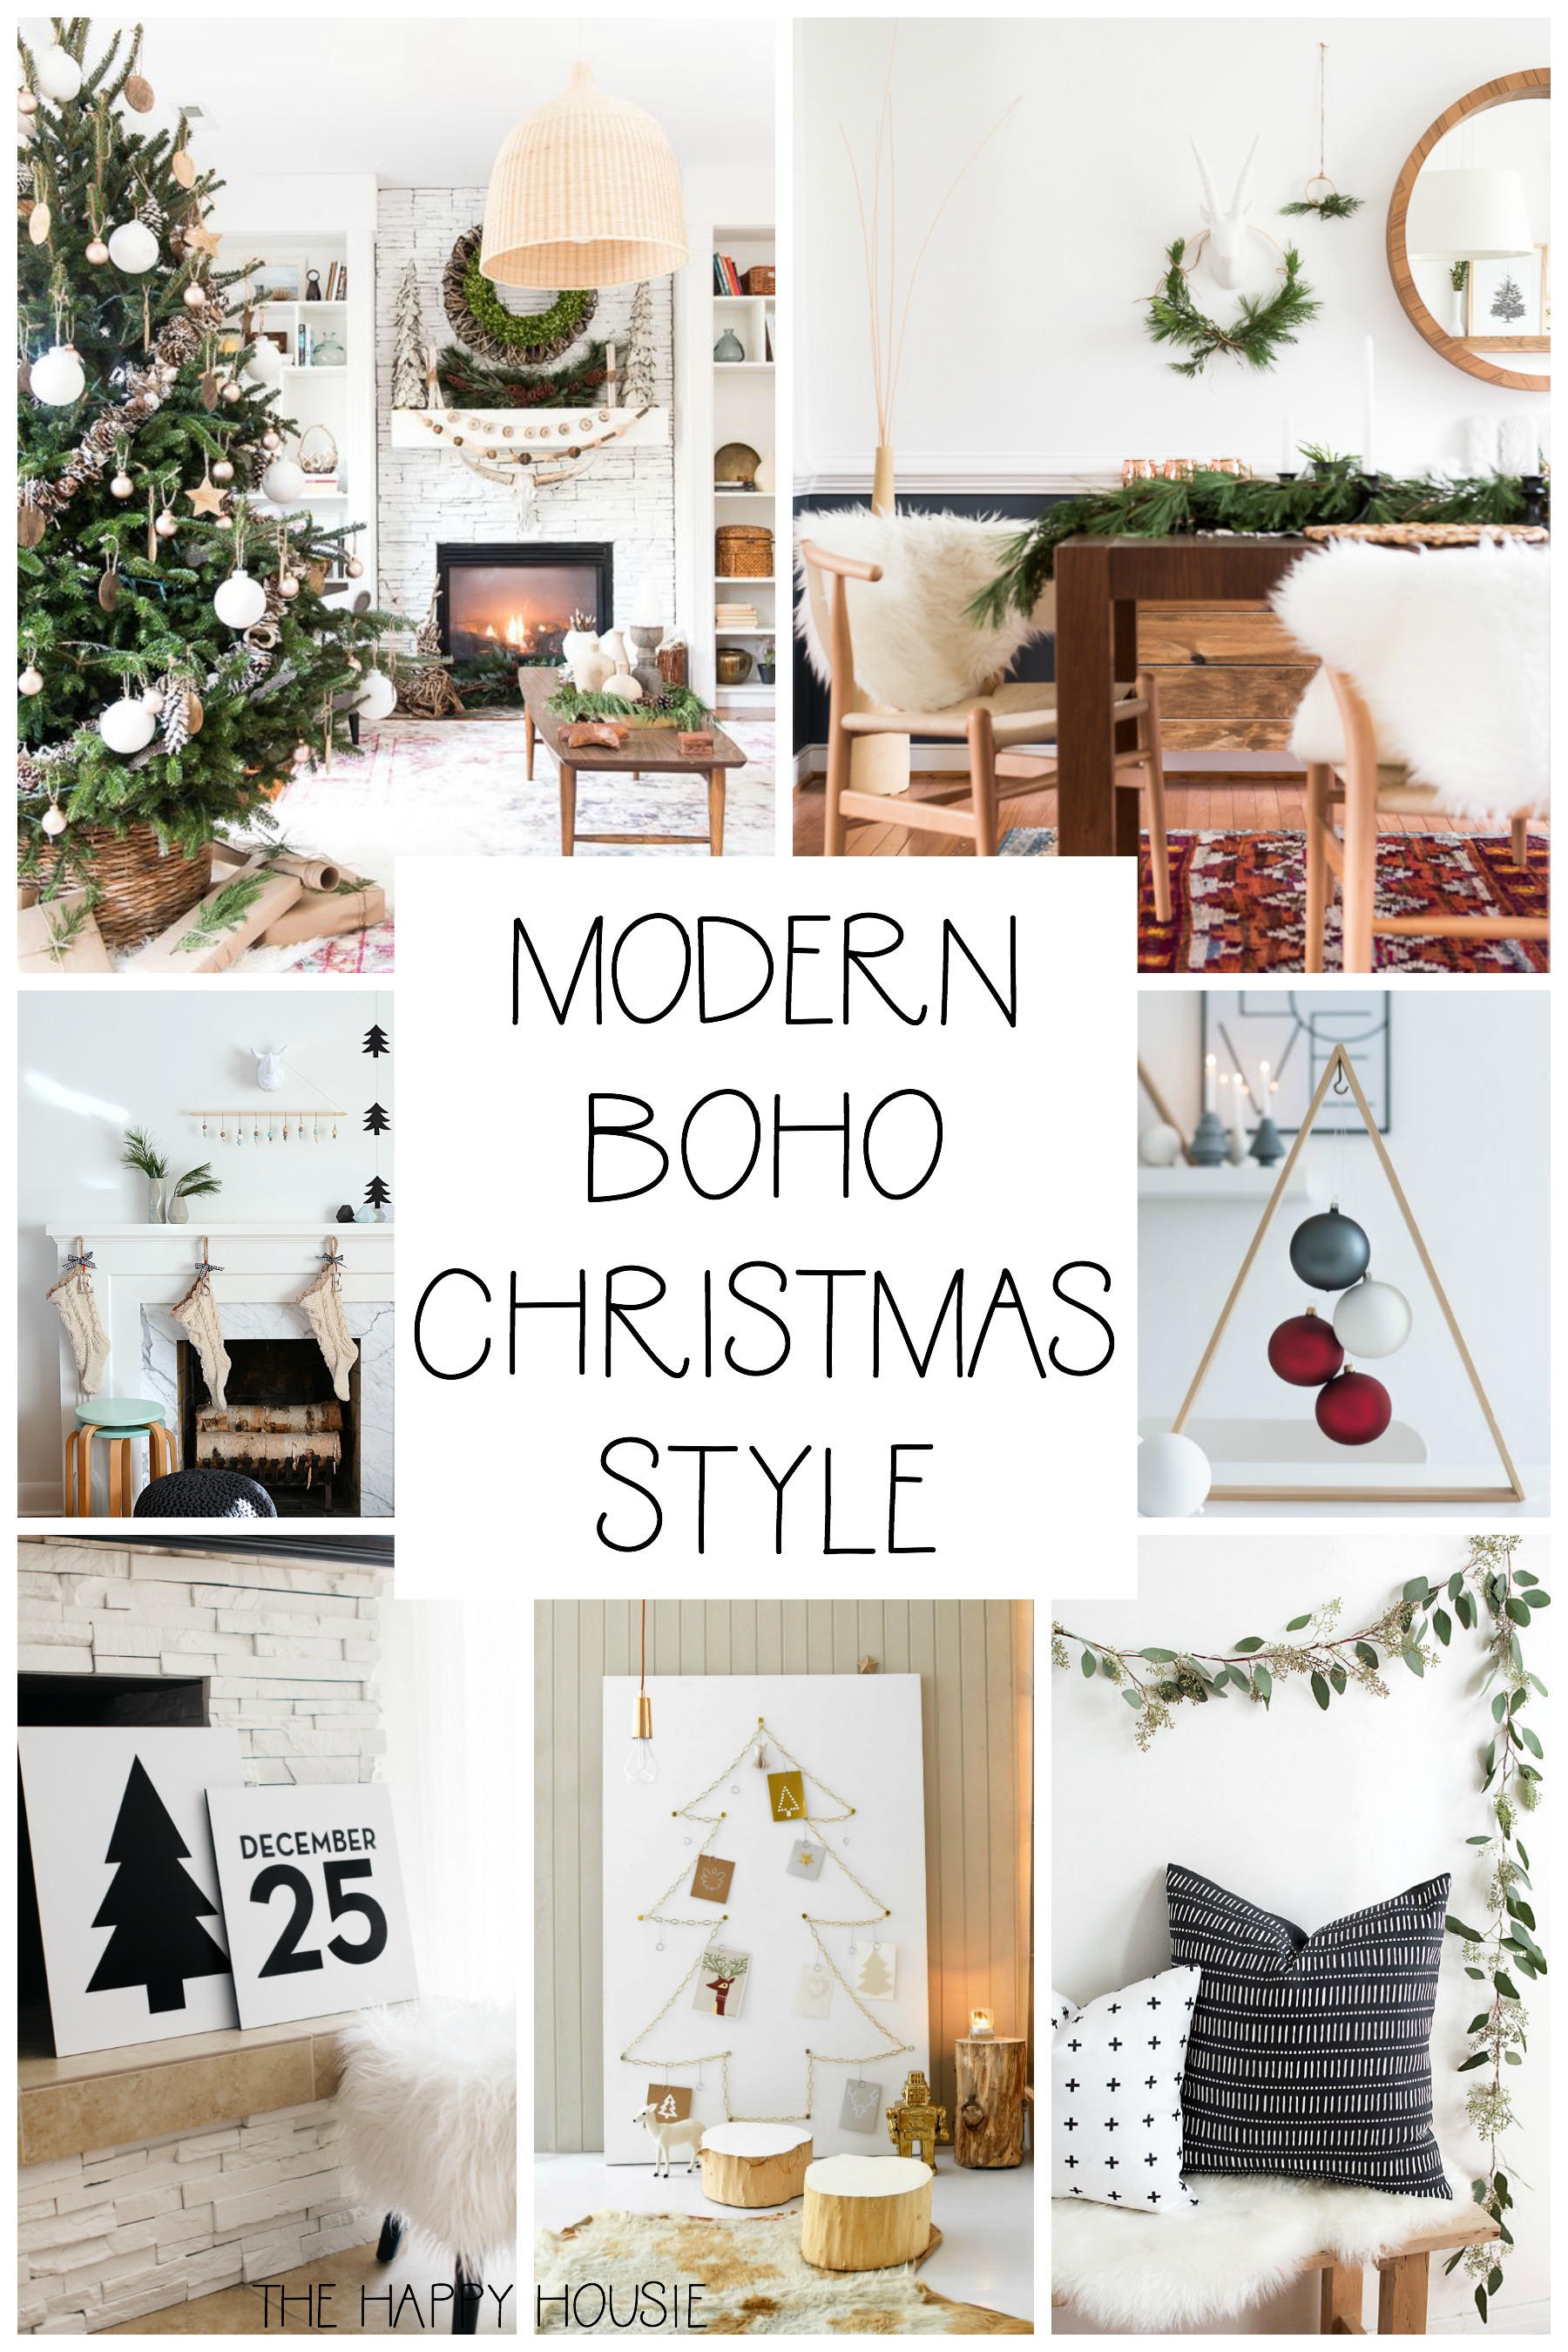 Modern Boho Christmas Style poster.